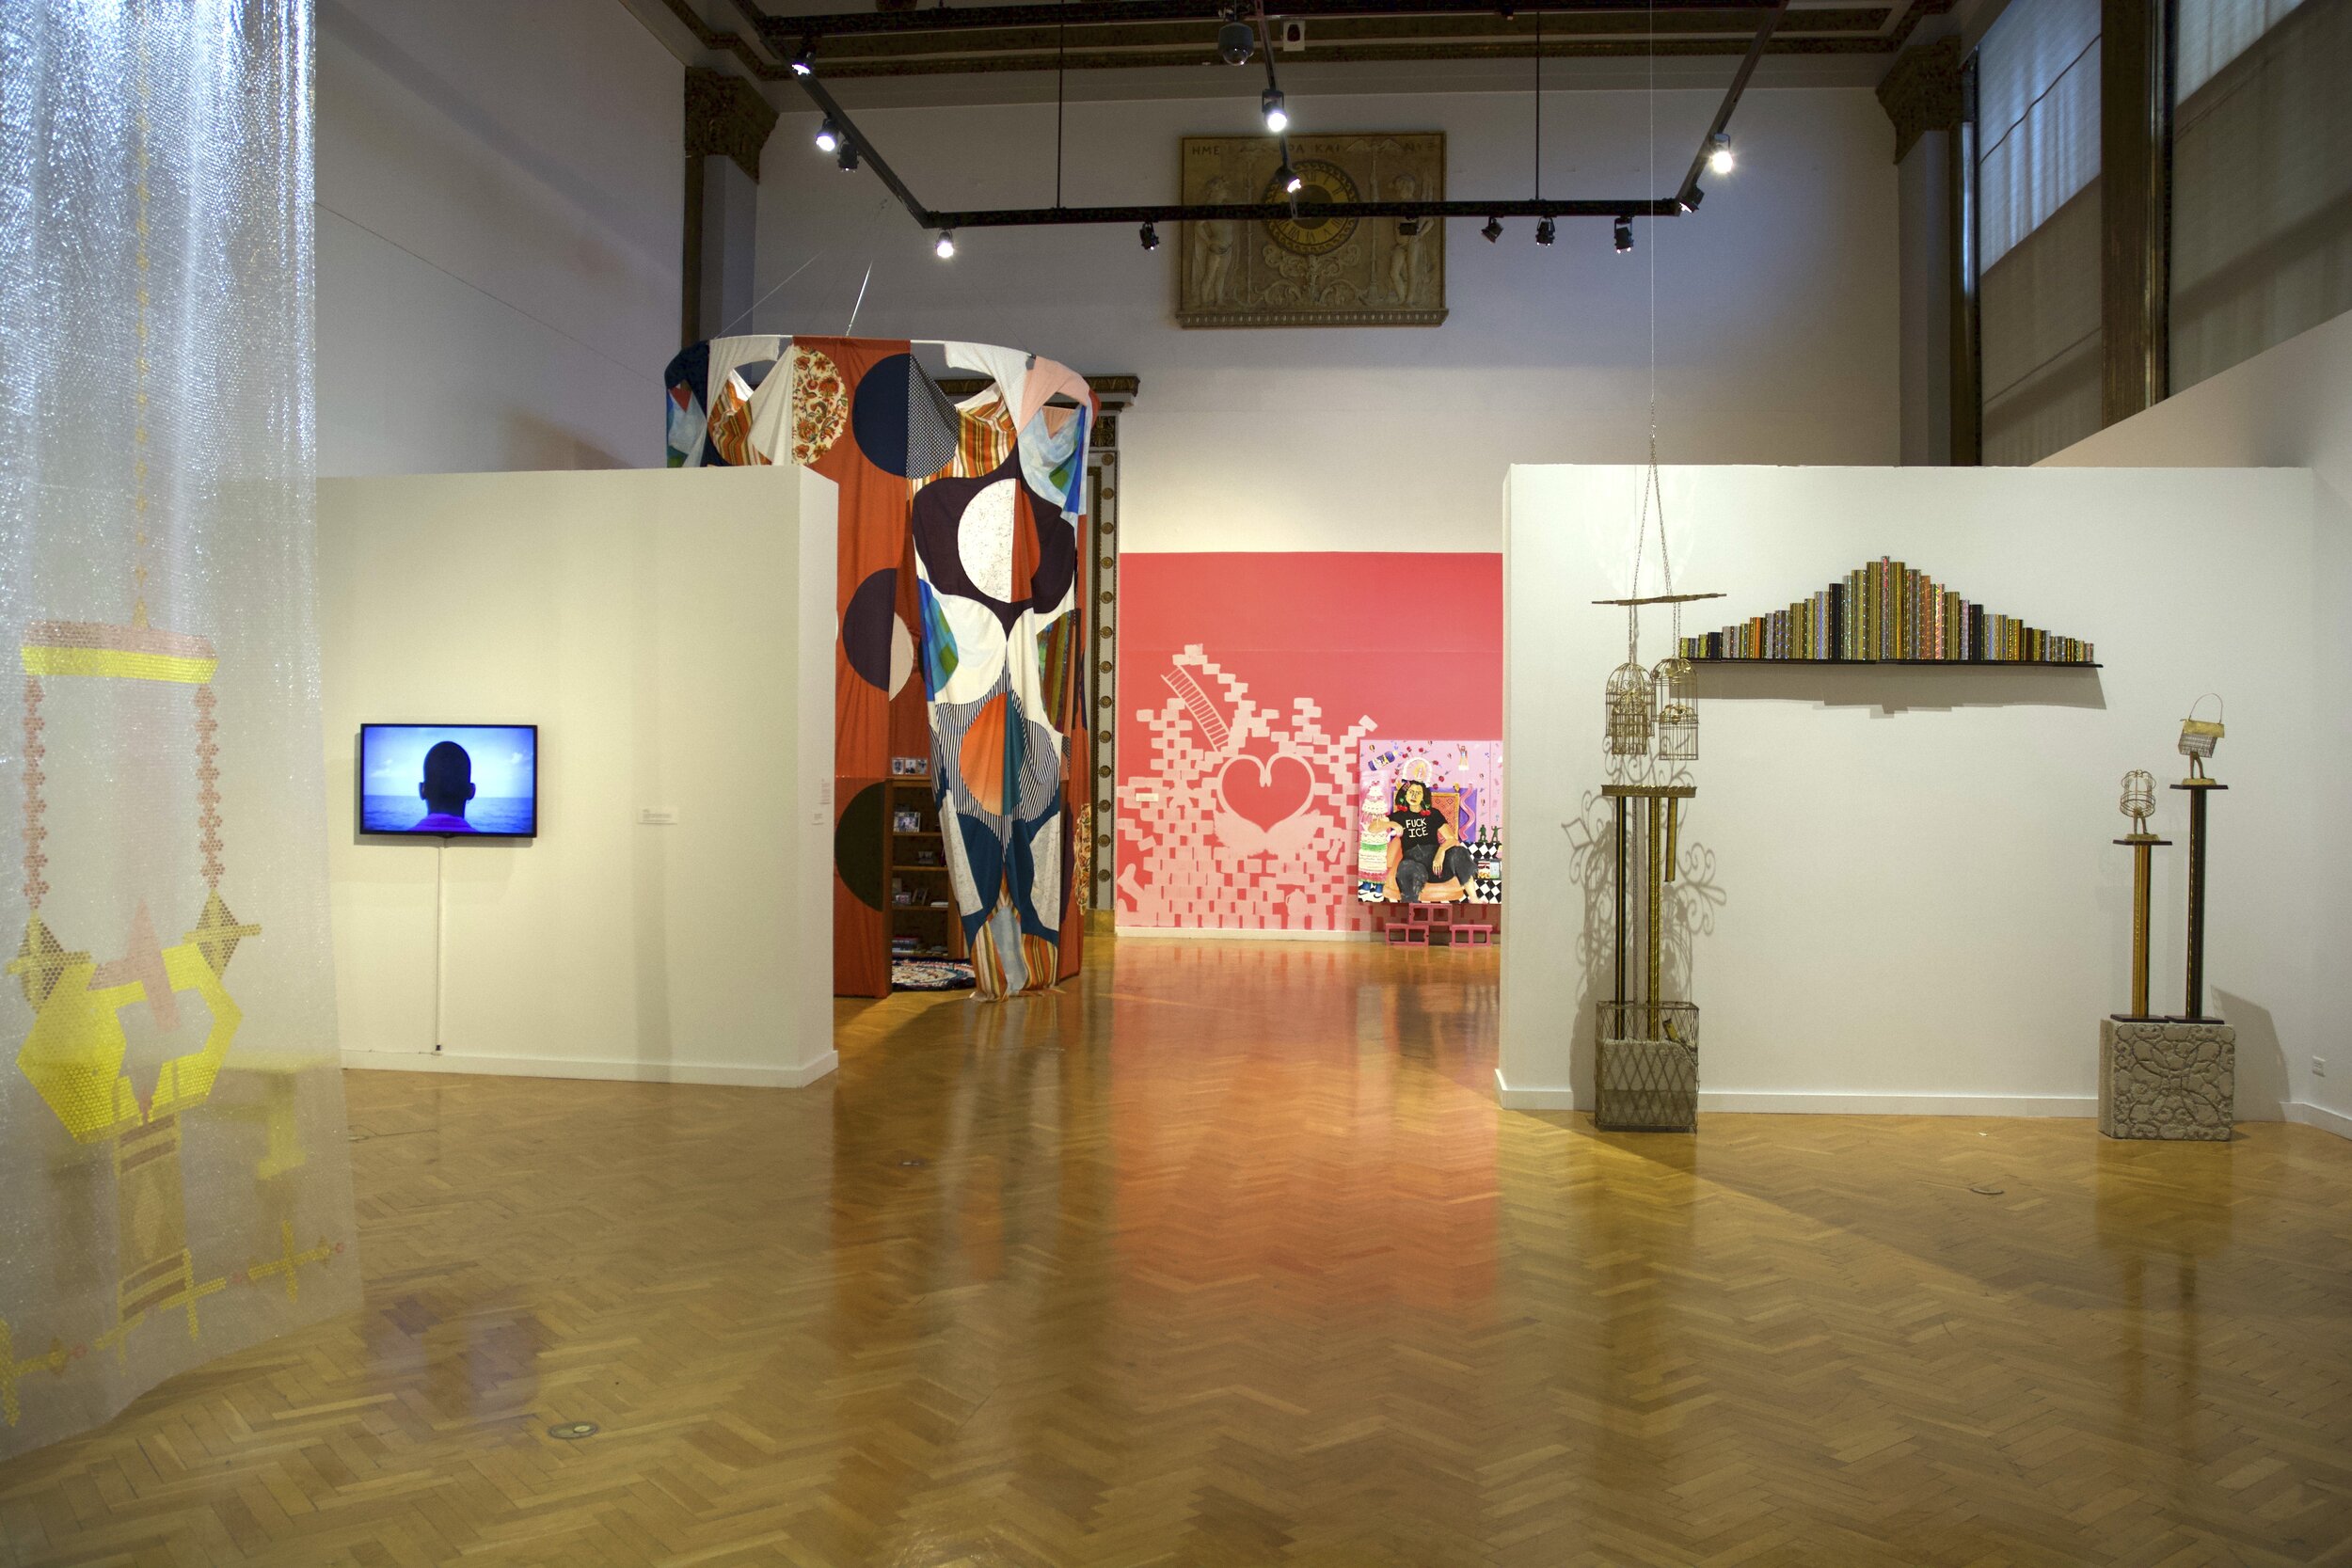  Installation view, left to right: Roni Packer, Frédéric Moffet, Lise Haller Baggesen, Yvette Mayorga, Benjamin Larose. 